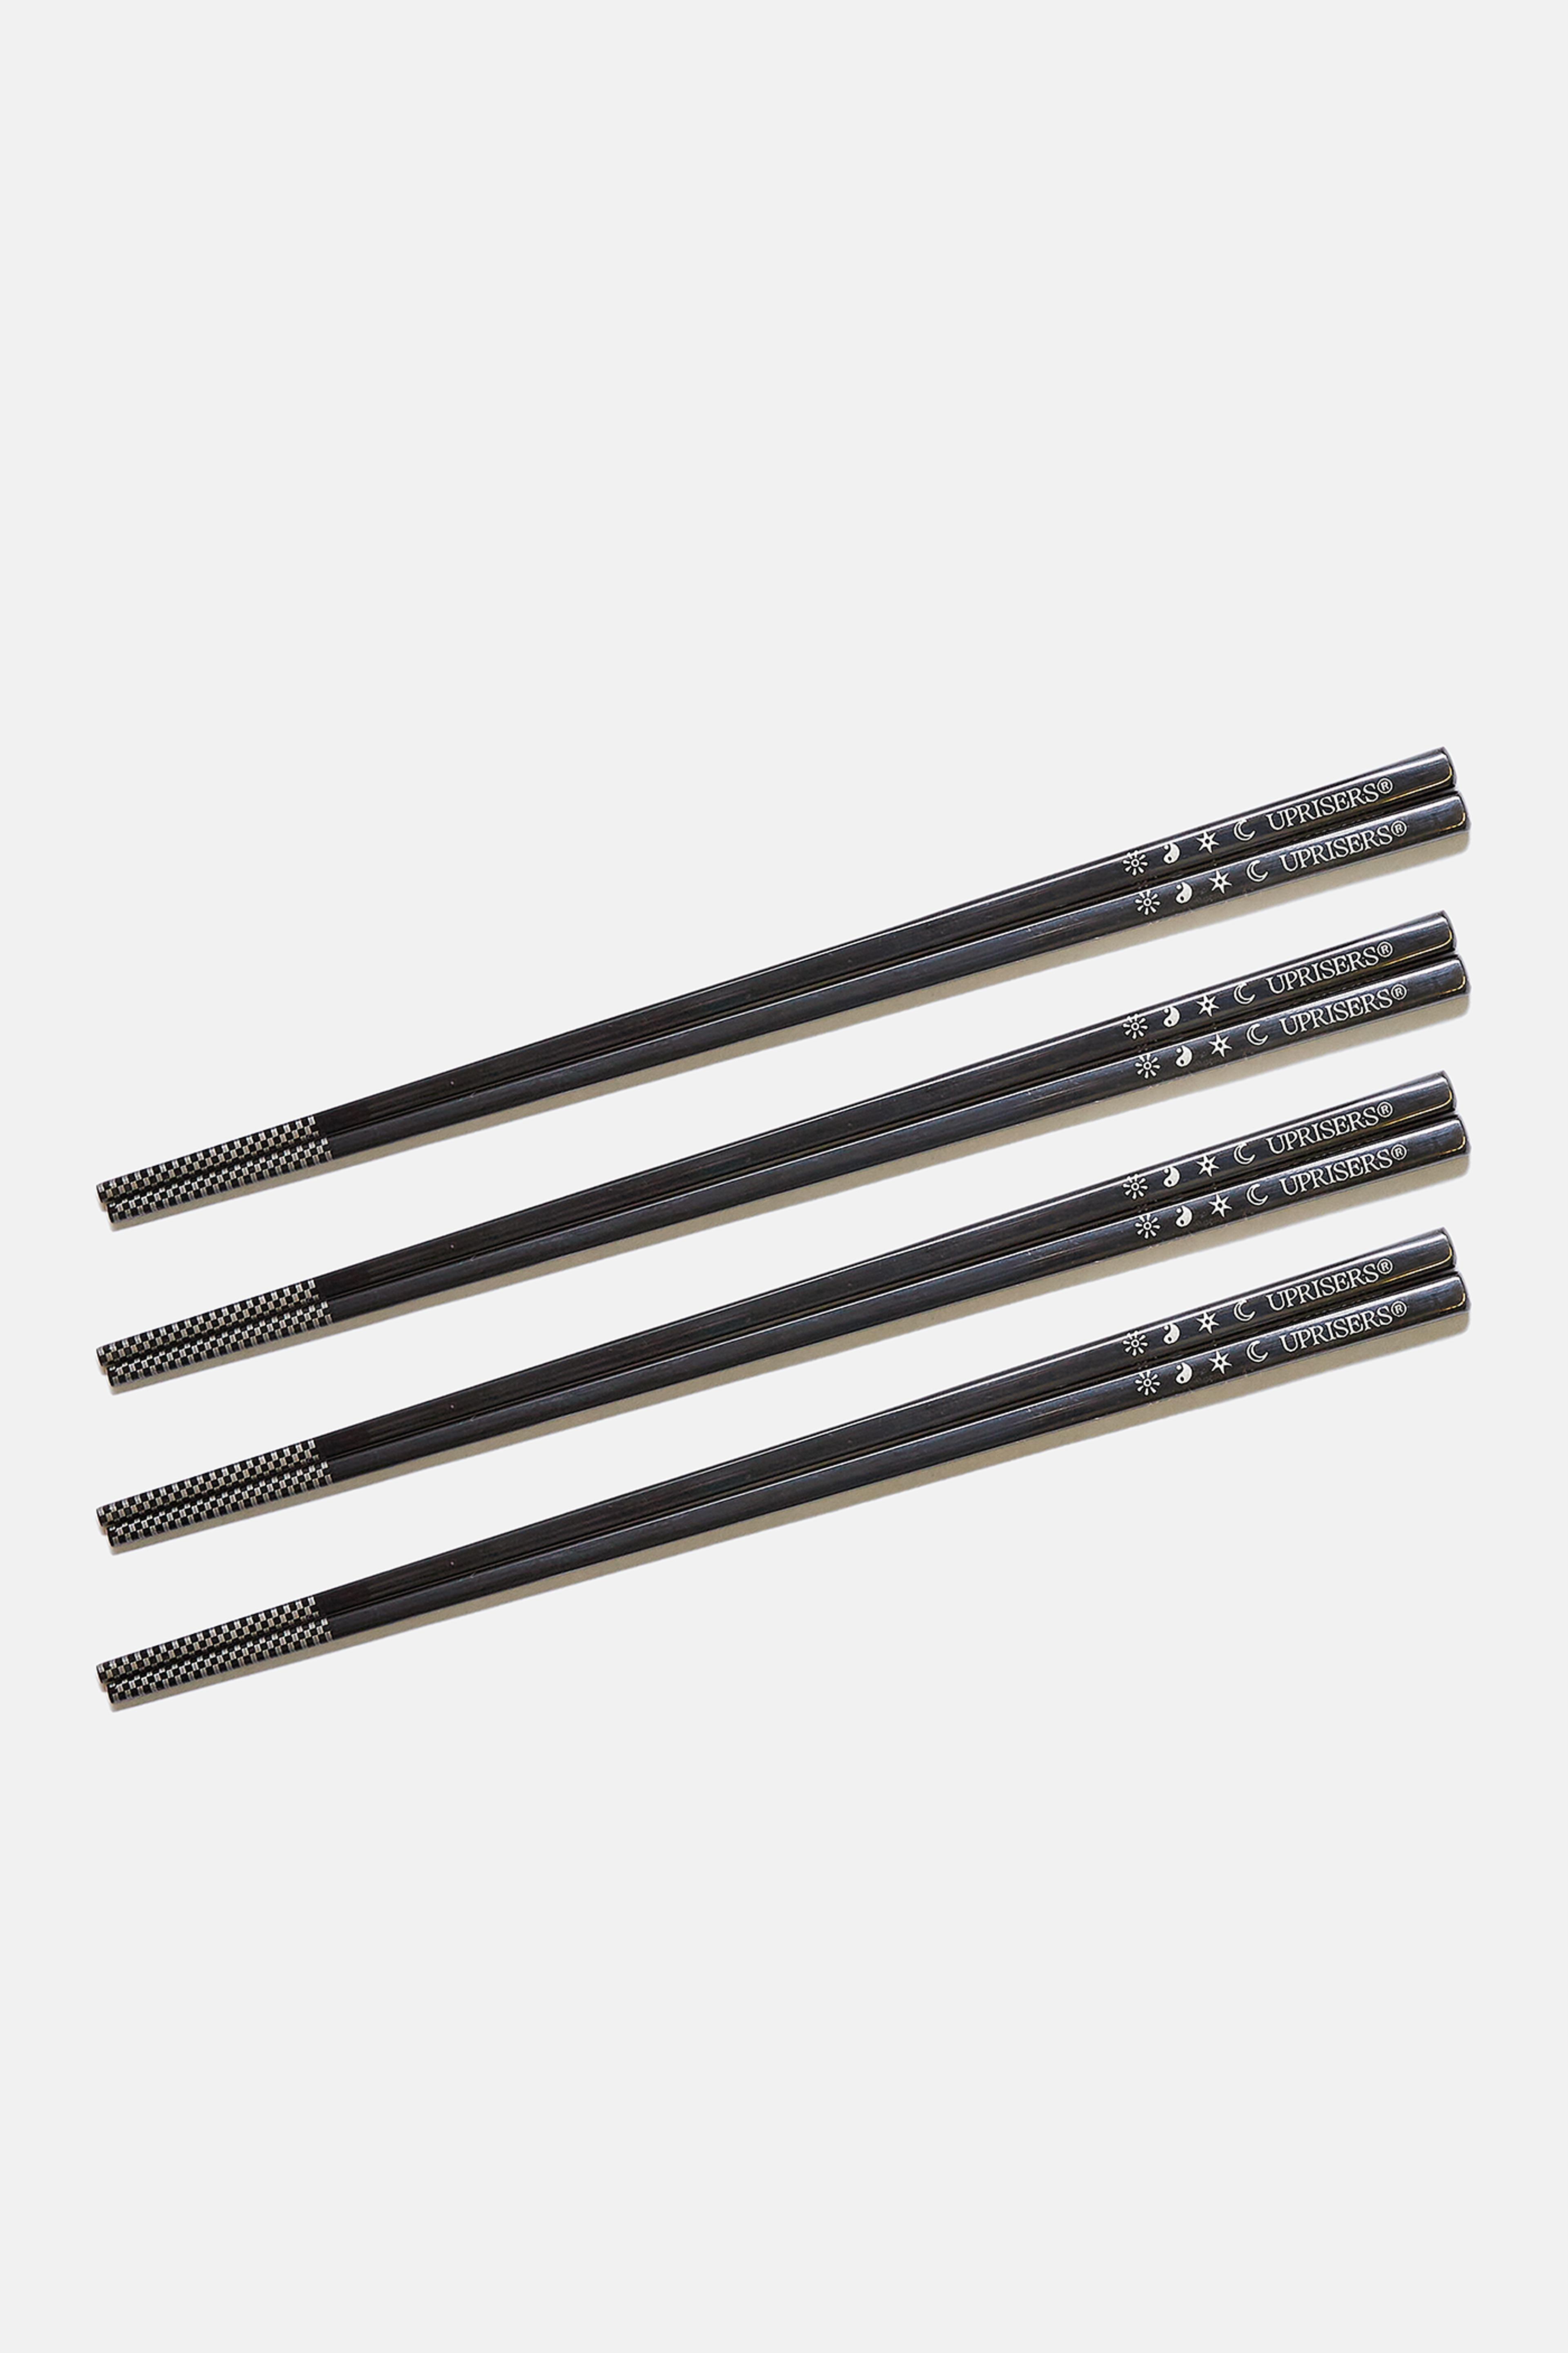 Alternate View 1 of UPRISERS Stainless Steel Chopsticks